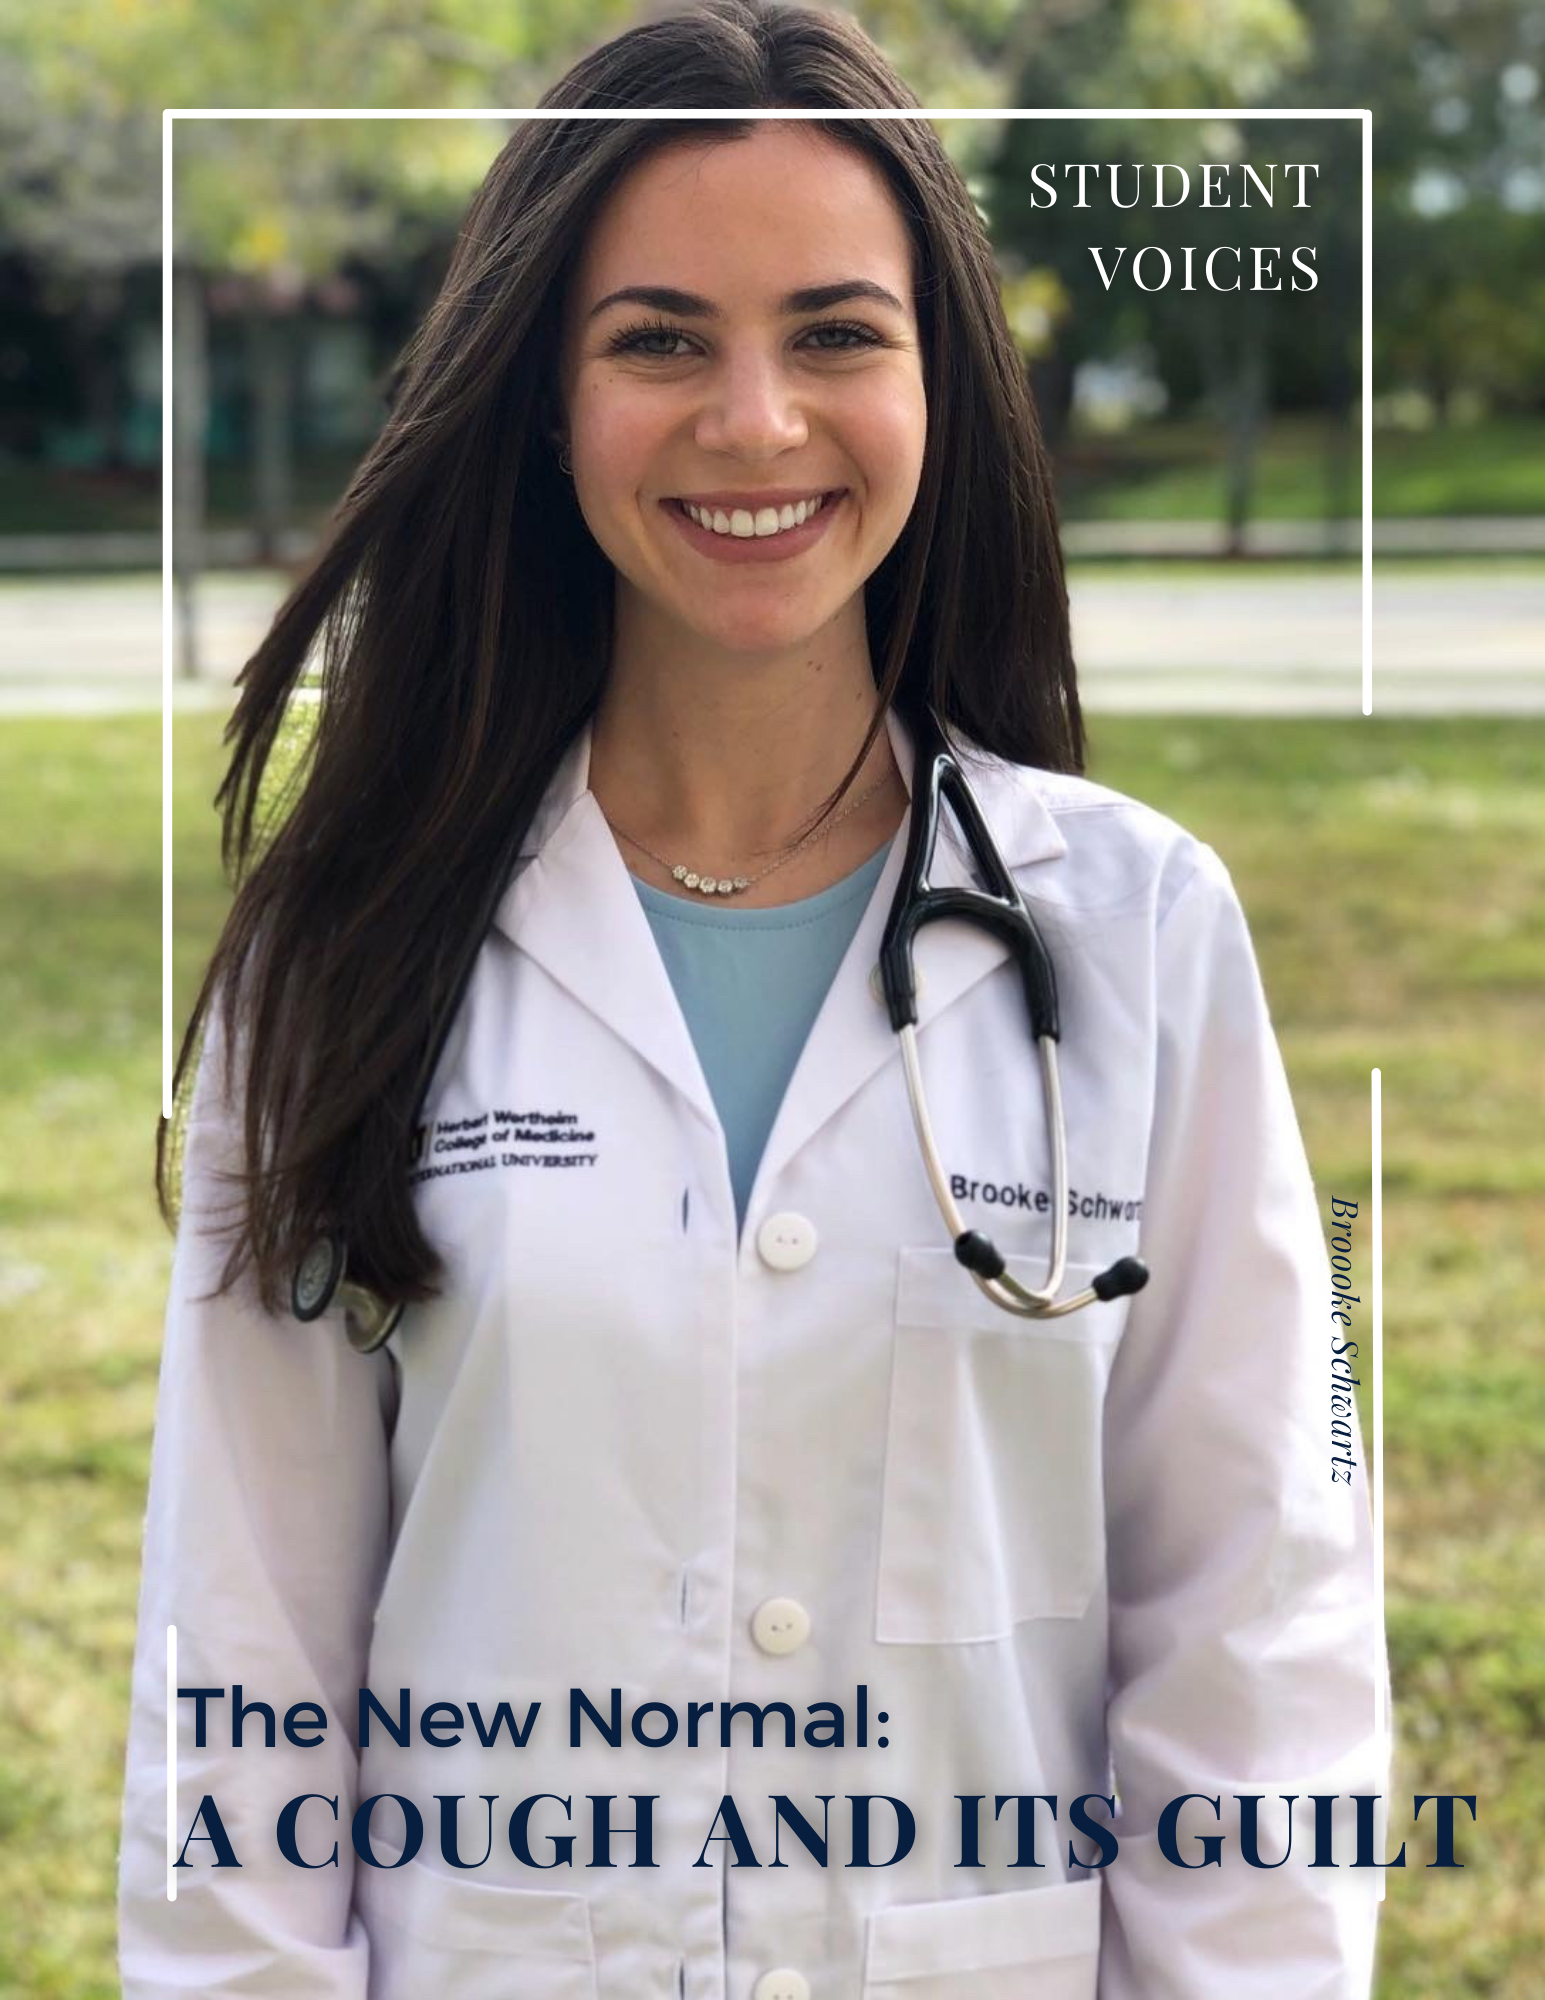 Photo of medical student Brooke Schwartz wearing white coat and stethoscope.